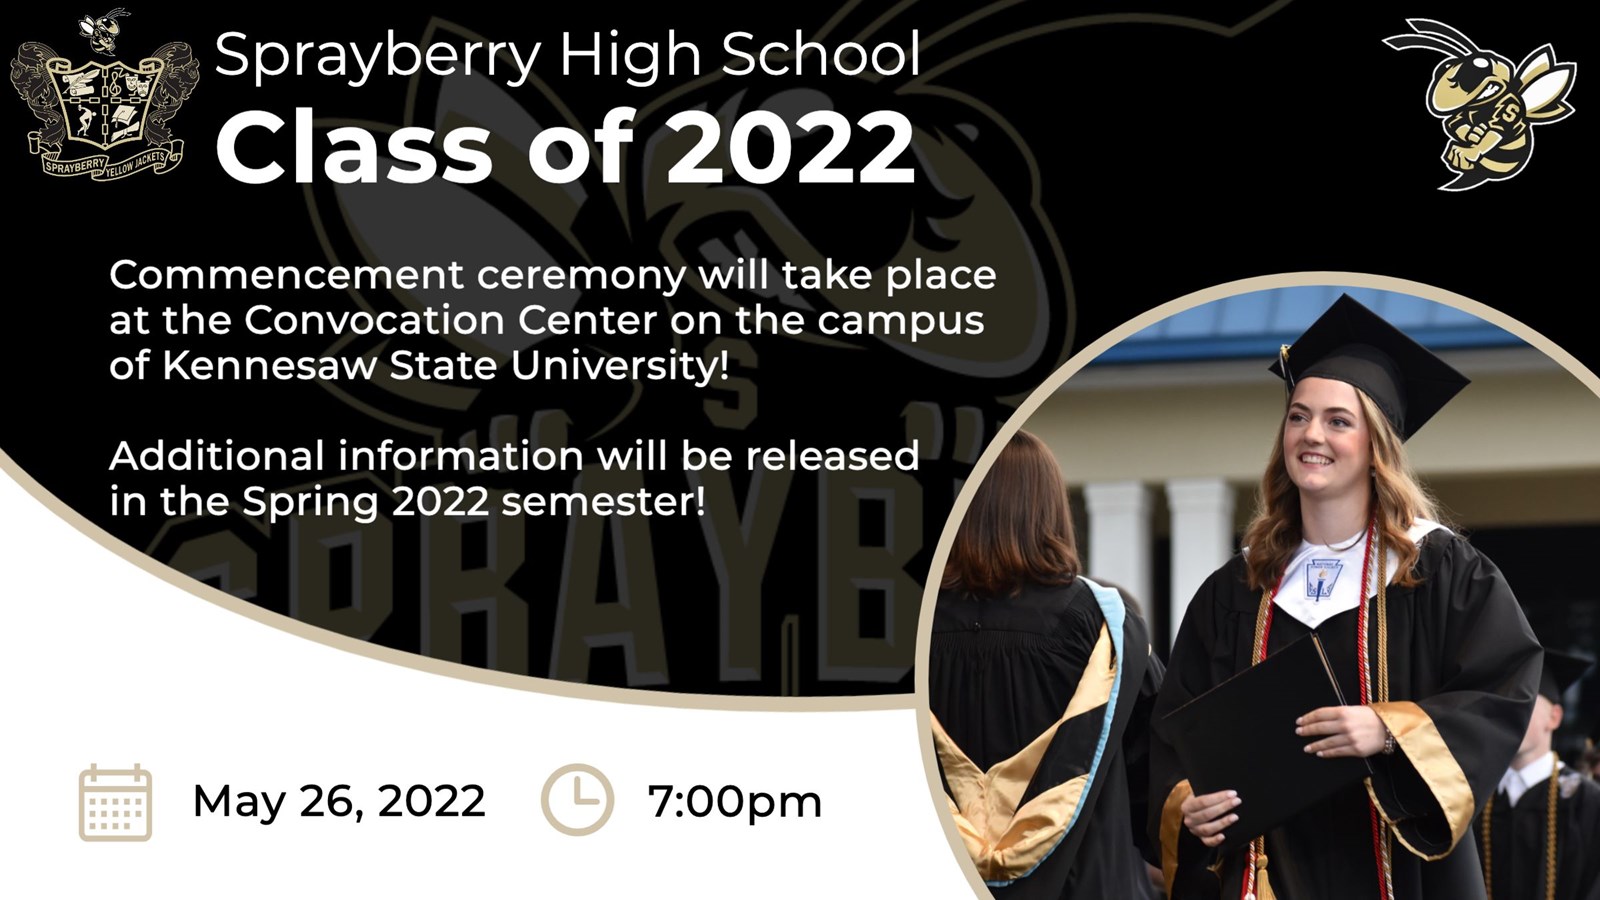 Class of 2022 Graduation Information